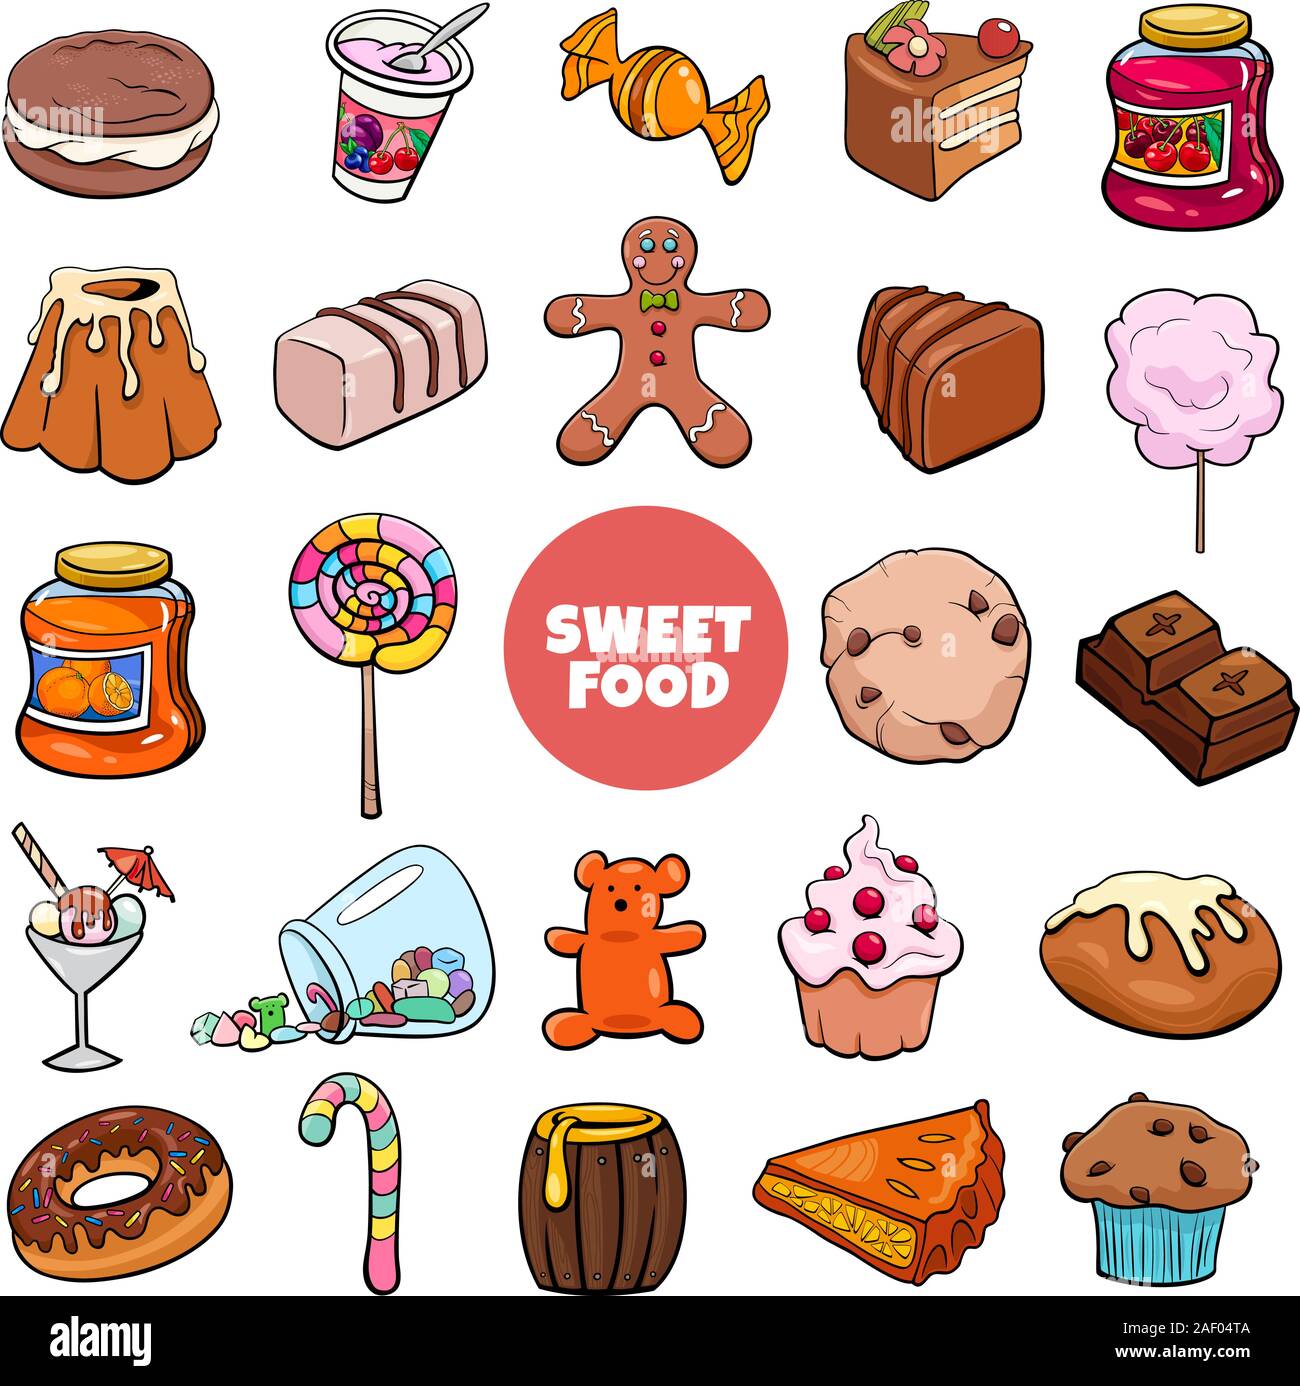 Cartoon Illustration of Sweet Food Objects Large Set Stock Vector